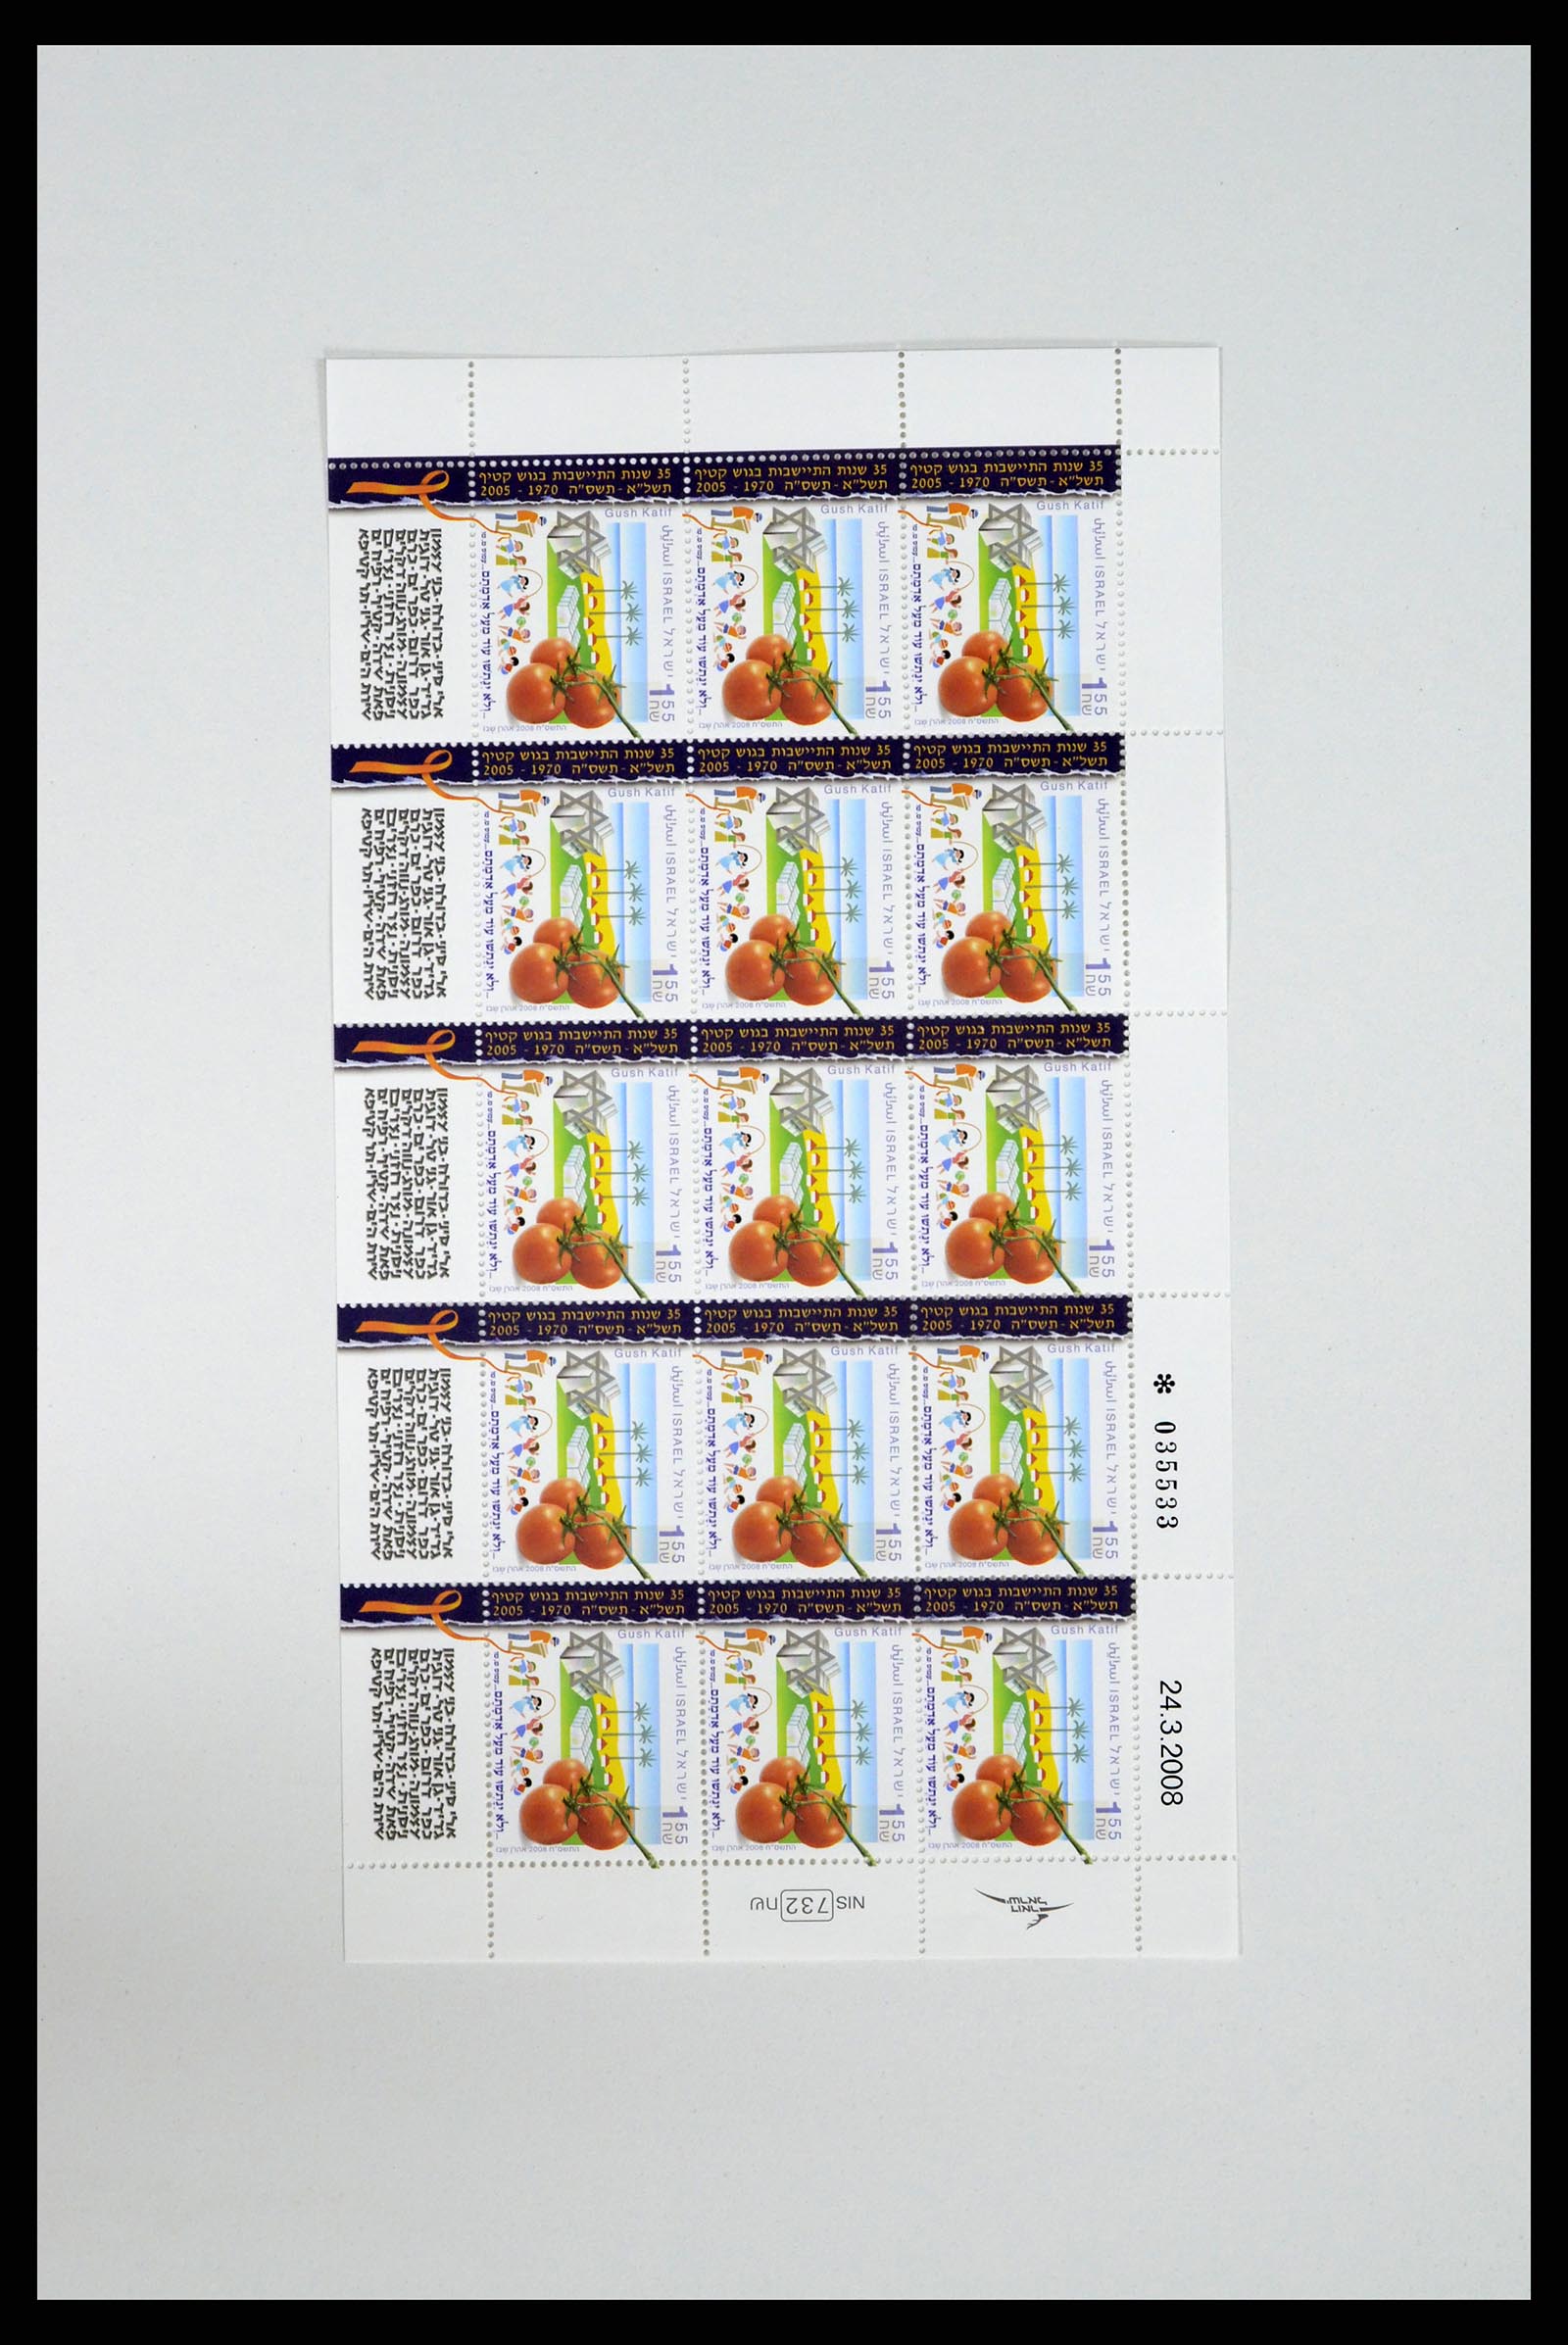 37779 059 - Stamp collection 37779 Israel sheetlets 1986-2009.